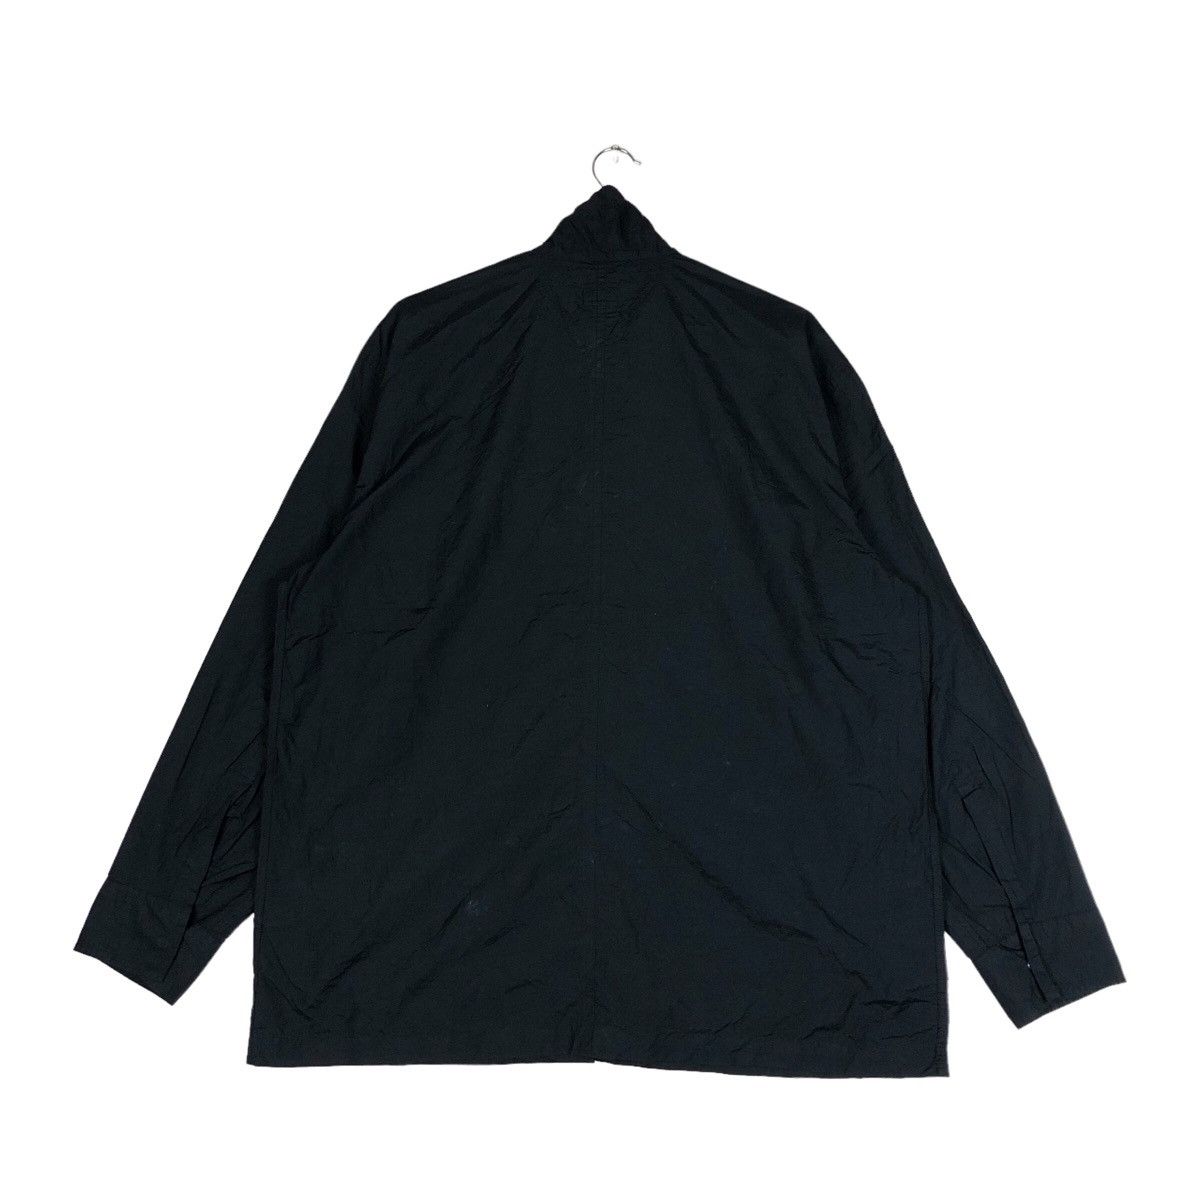 Kenzo Vintage Kenzo Sweater Windbreaker All Black Rare Size US XL / EU 56 / 4 - 5 Thumbnail